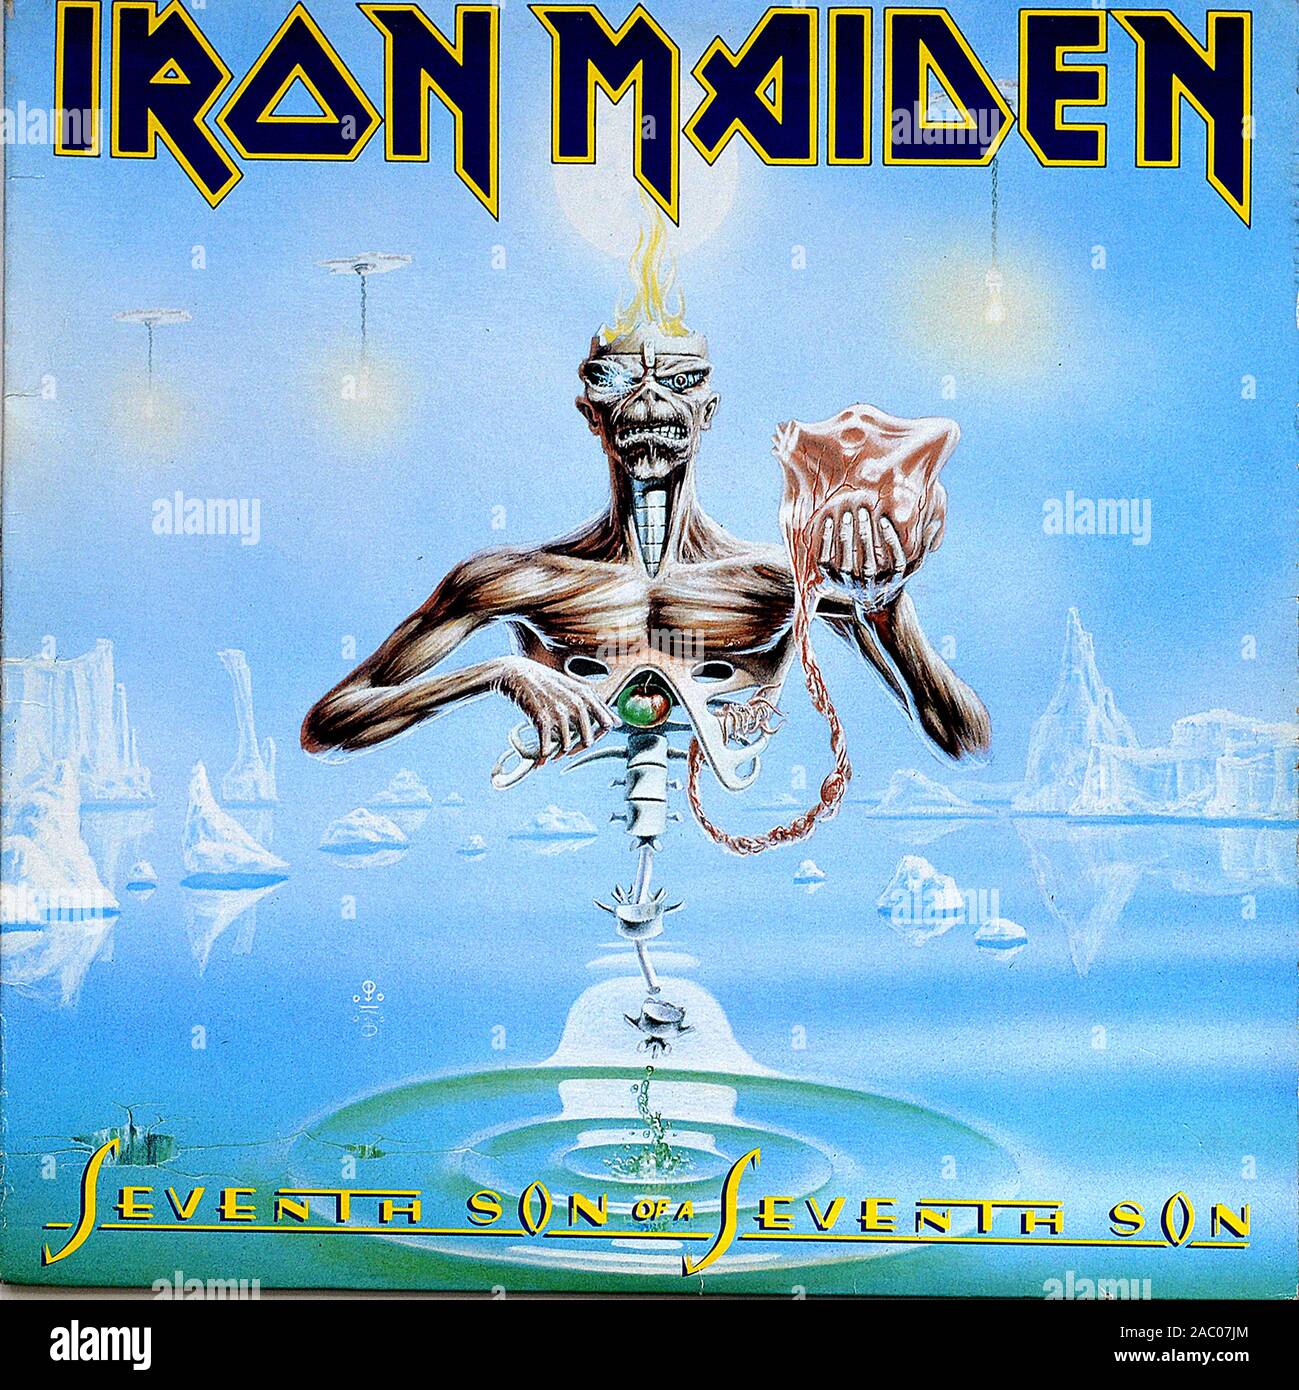 IRON MAIDEN Seventh Son of Son - Vintage vinyl album cover Stock ...